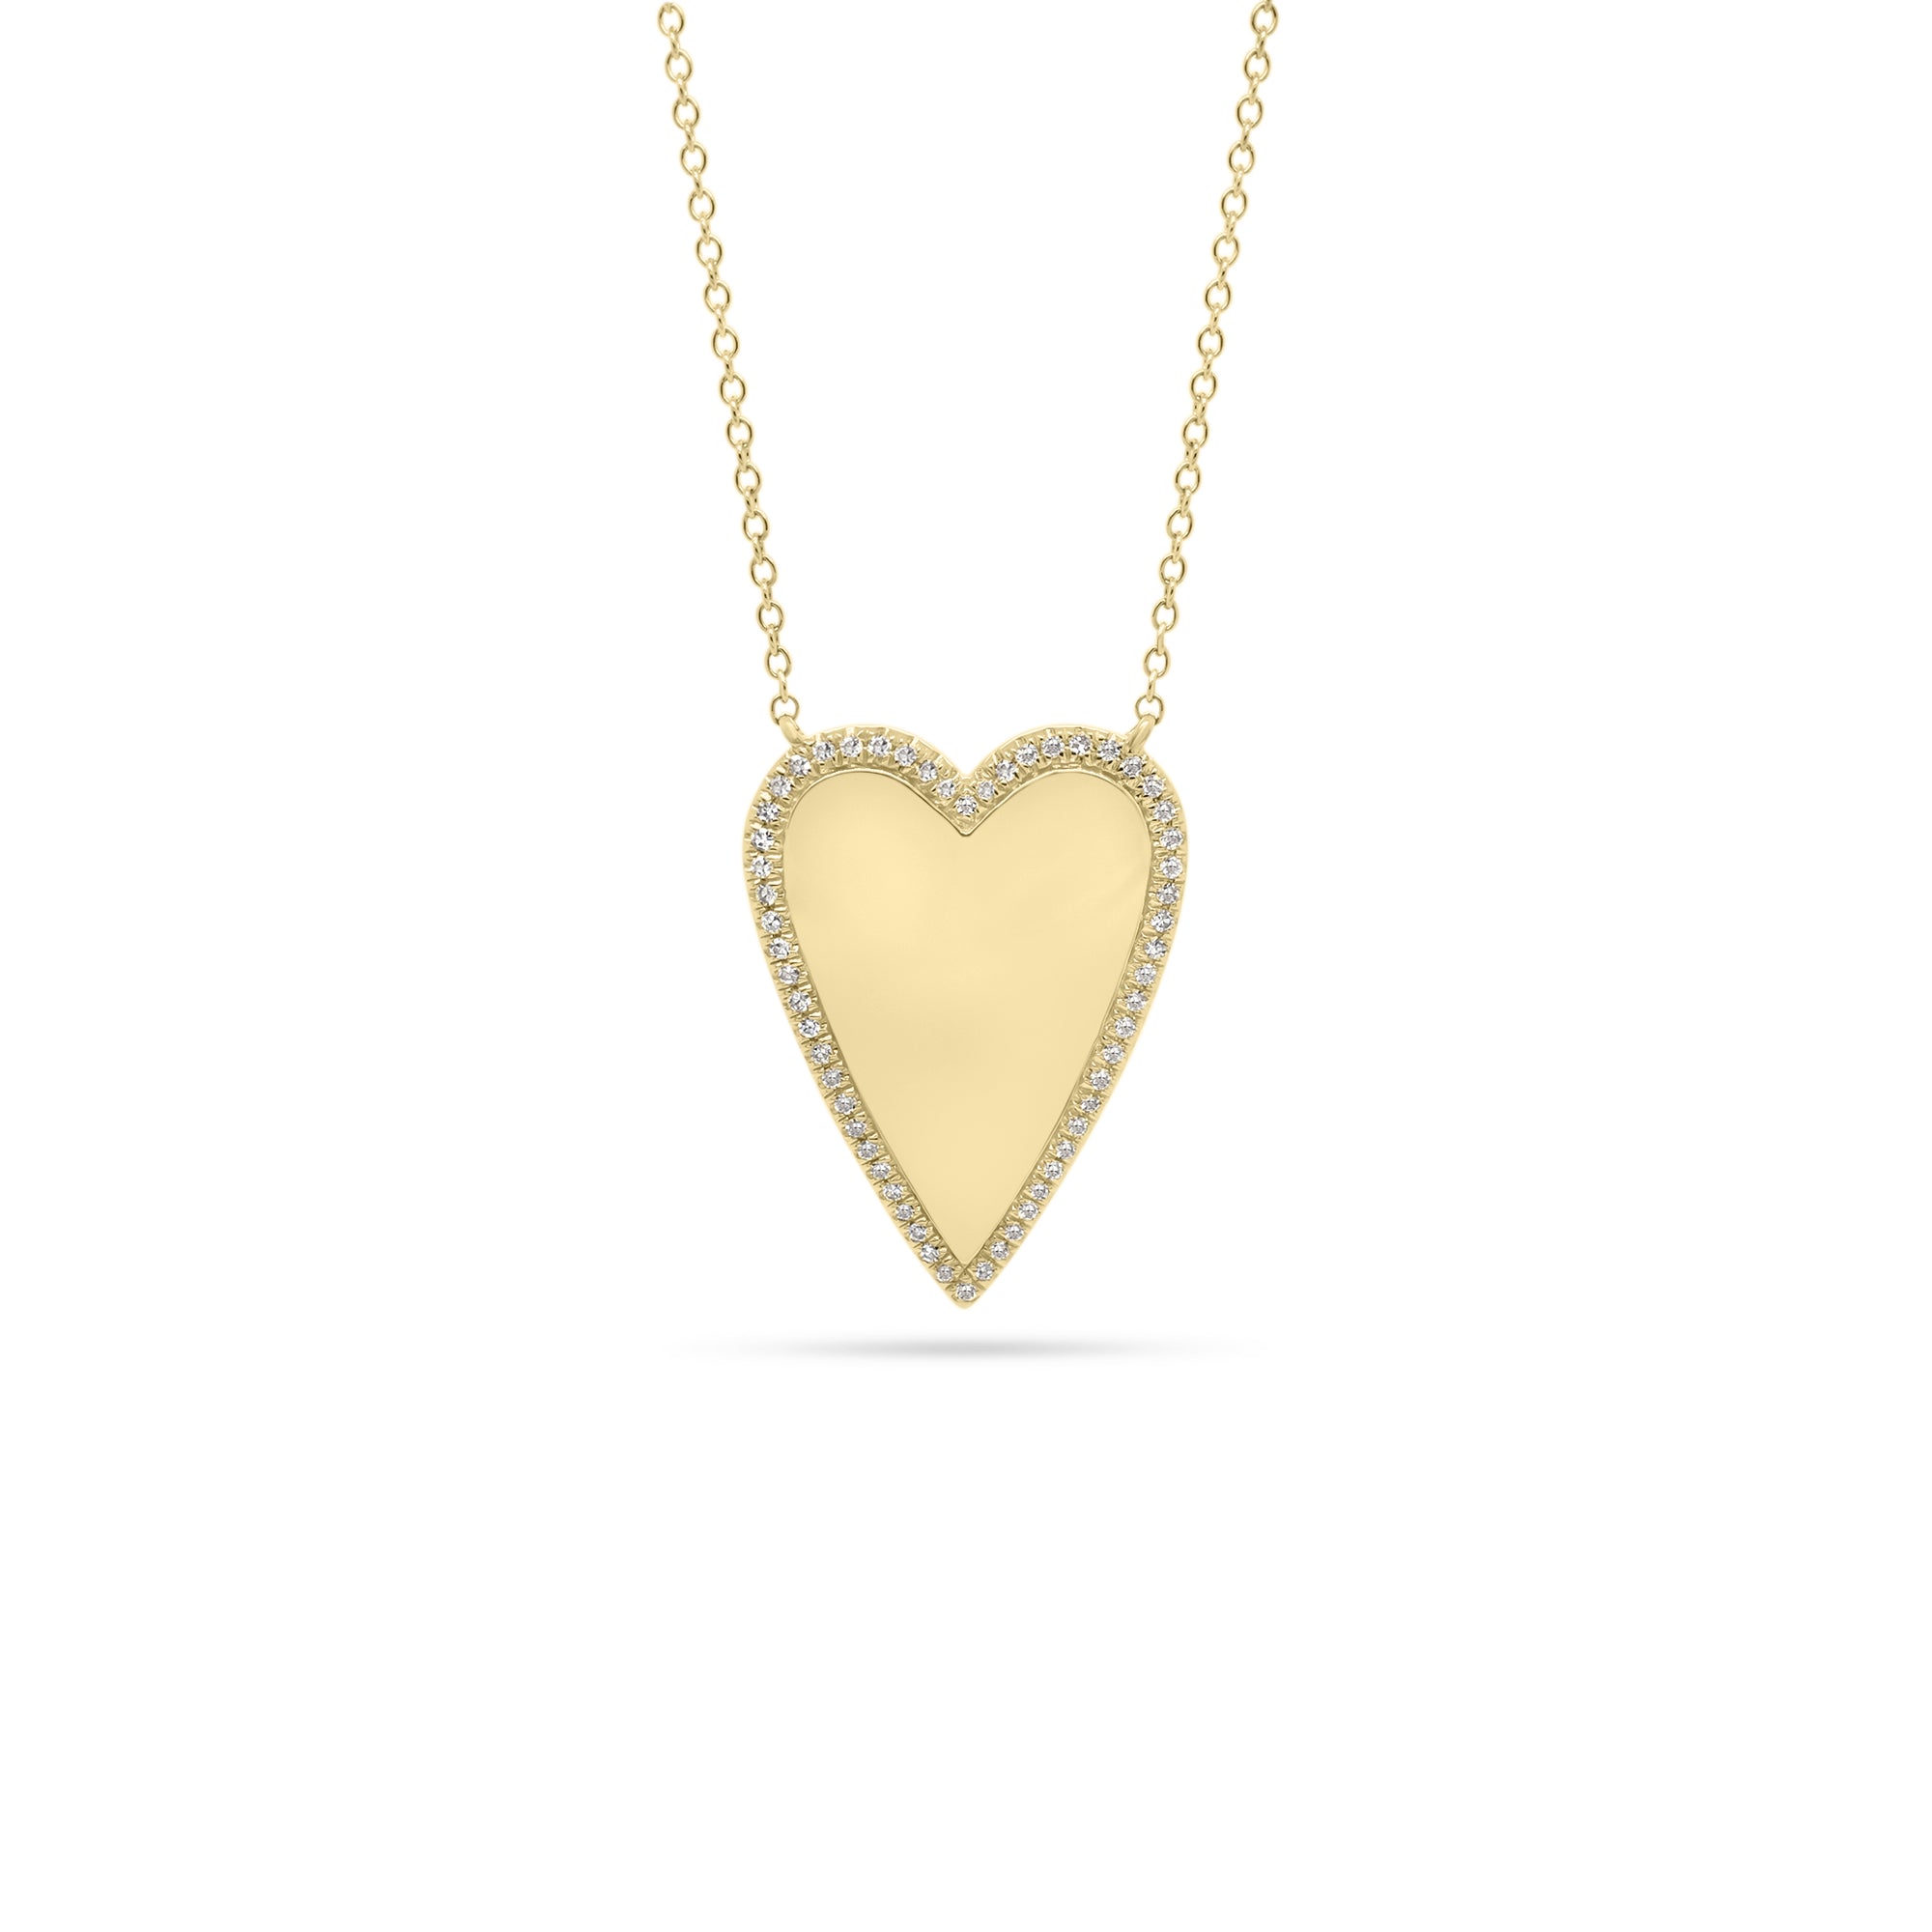 Diamond-Framed Elongated Heart Pendant  - 14K gold weighing 5.42 grams  - 58 round diamonds totaling 0.14 carats